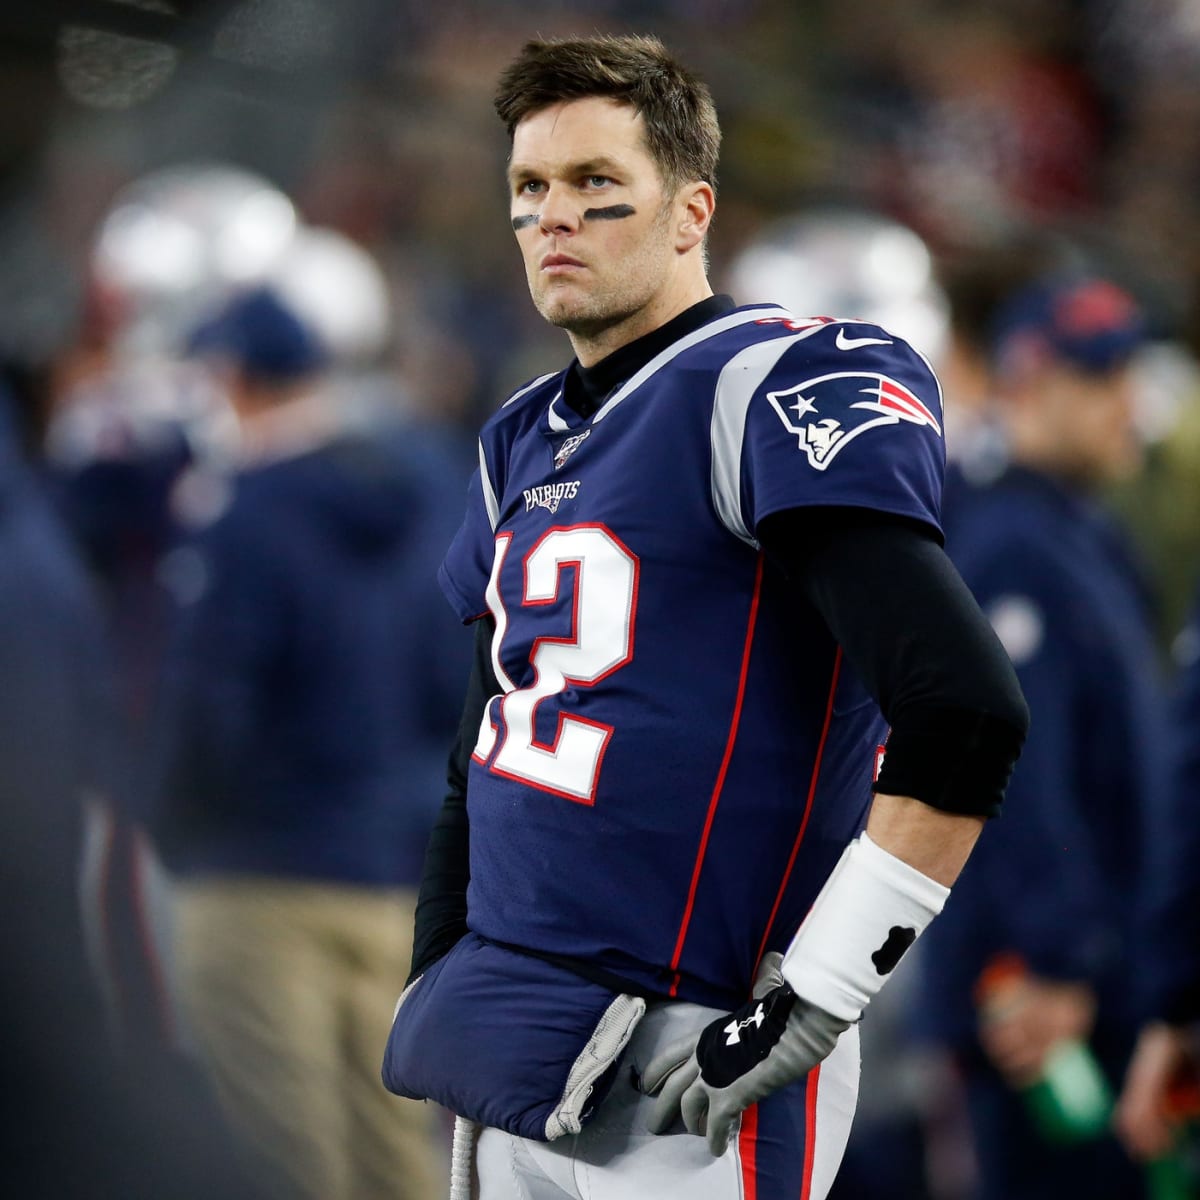 ESPN to air nine-part docuseries on Tom Brady in 2021 